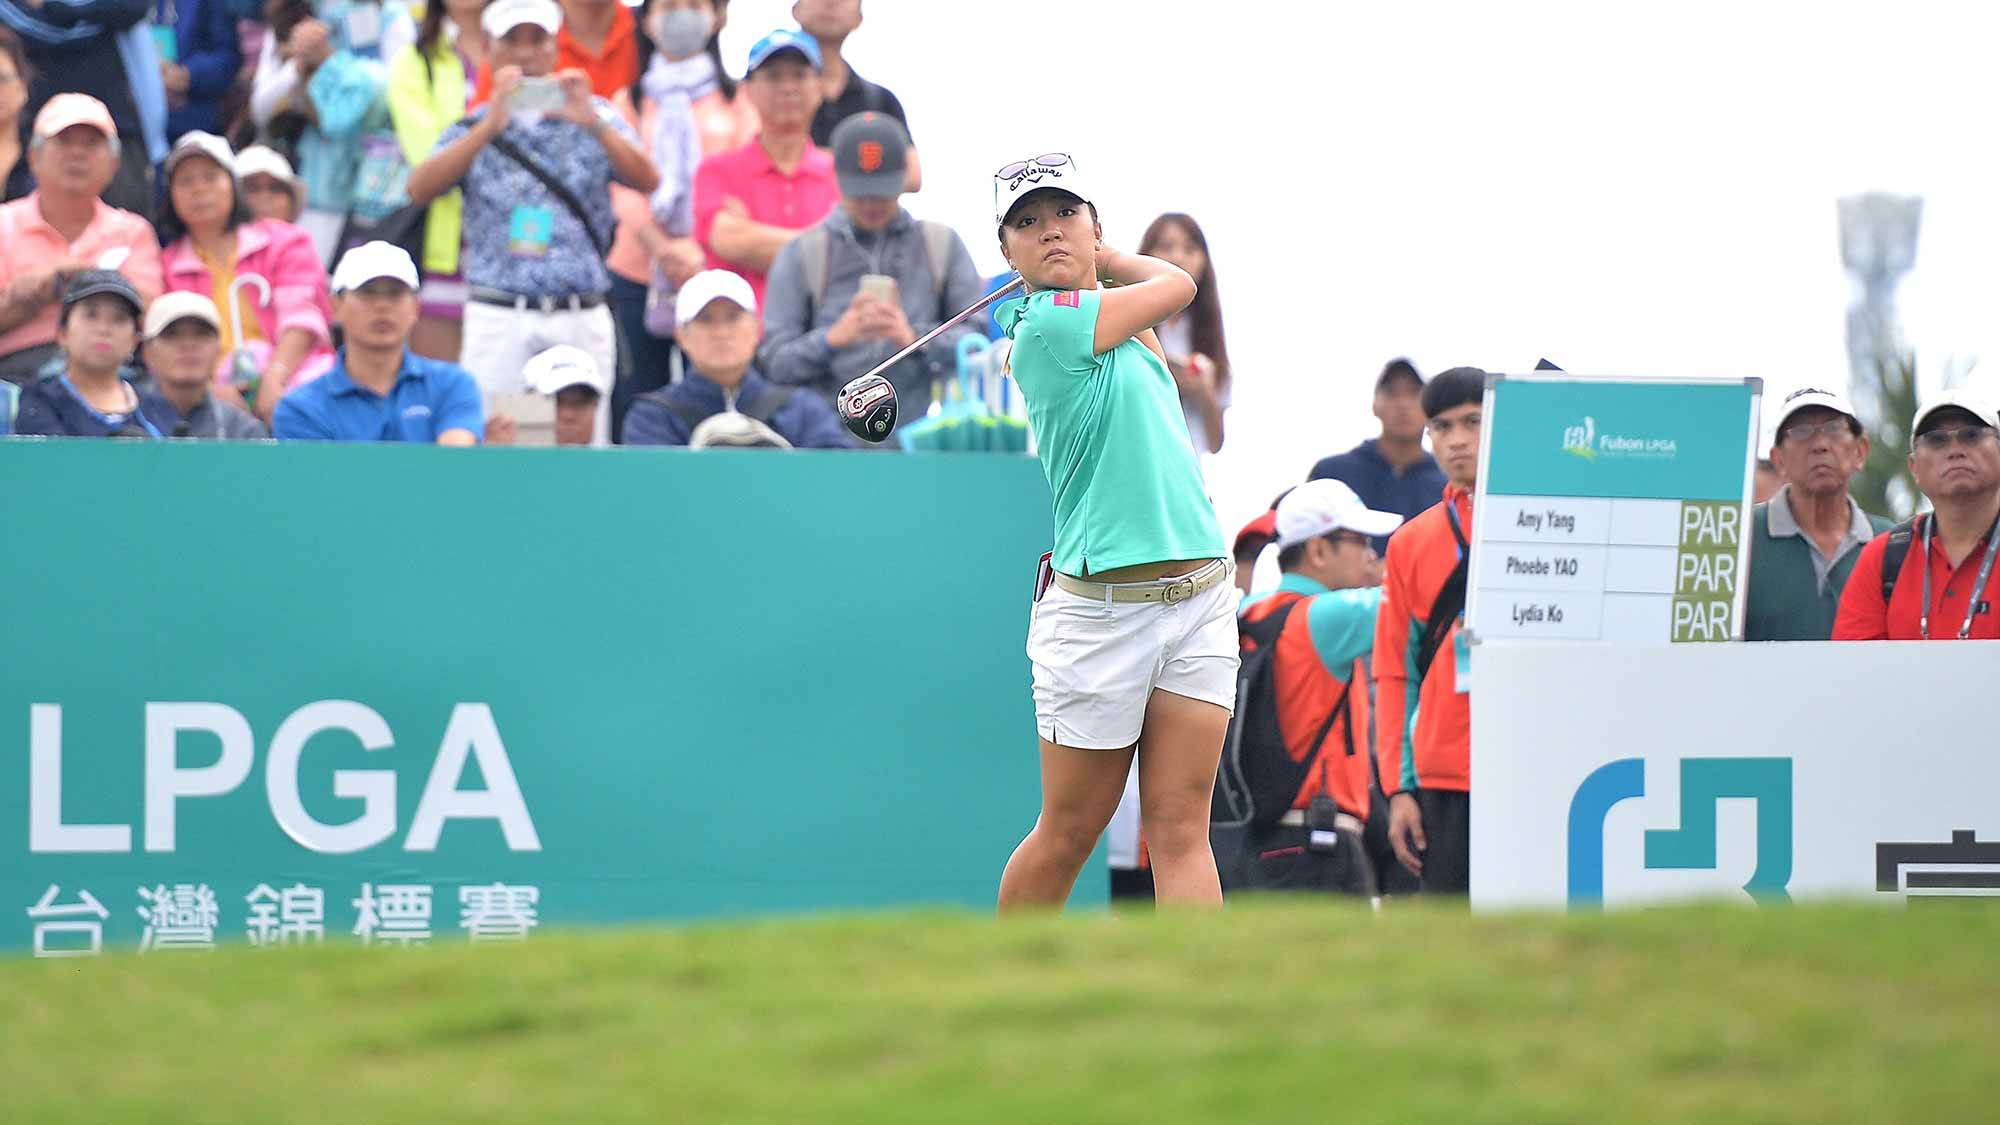 Lydia Ko of New Zealand plays the shot during the round one of 2015 Fubon LPGA Taiwan Championship at Miramar Golf & Country Club